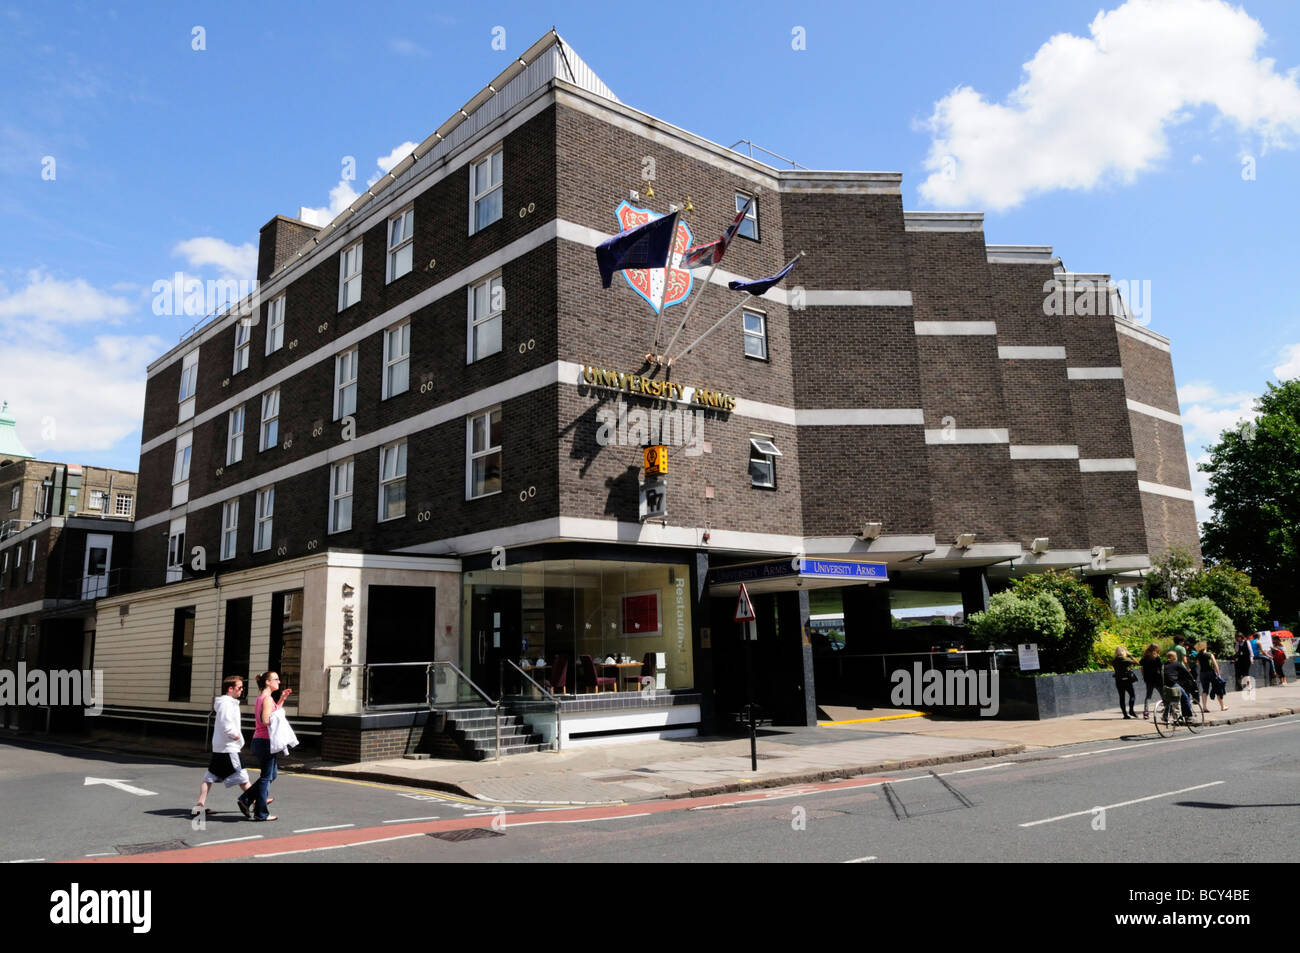 The University Arms Hotel, Regent Street, Cambridge England Uk Stock Photo